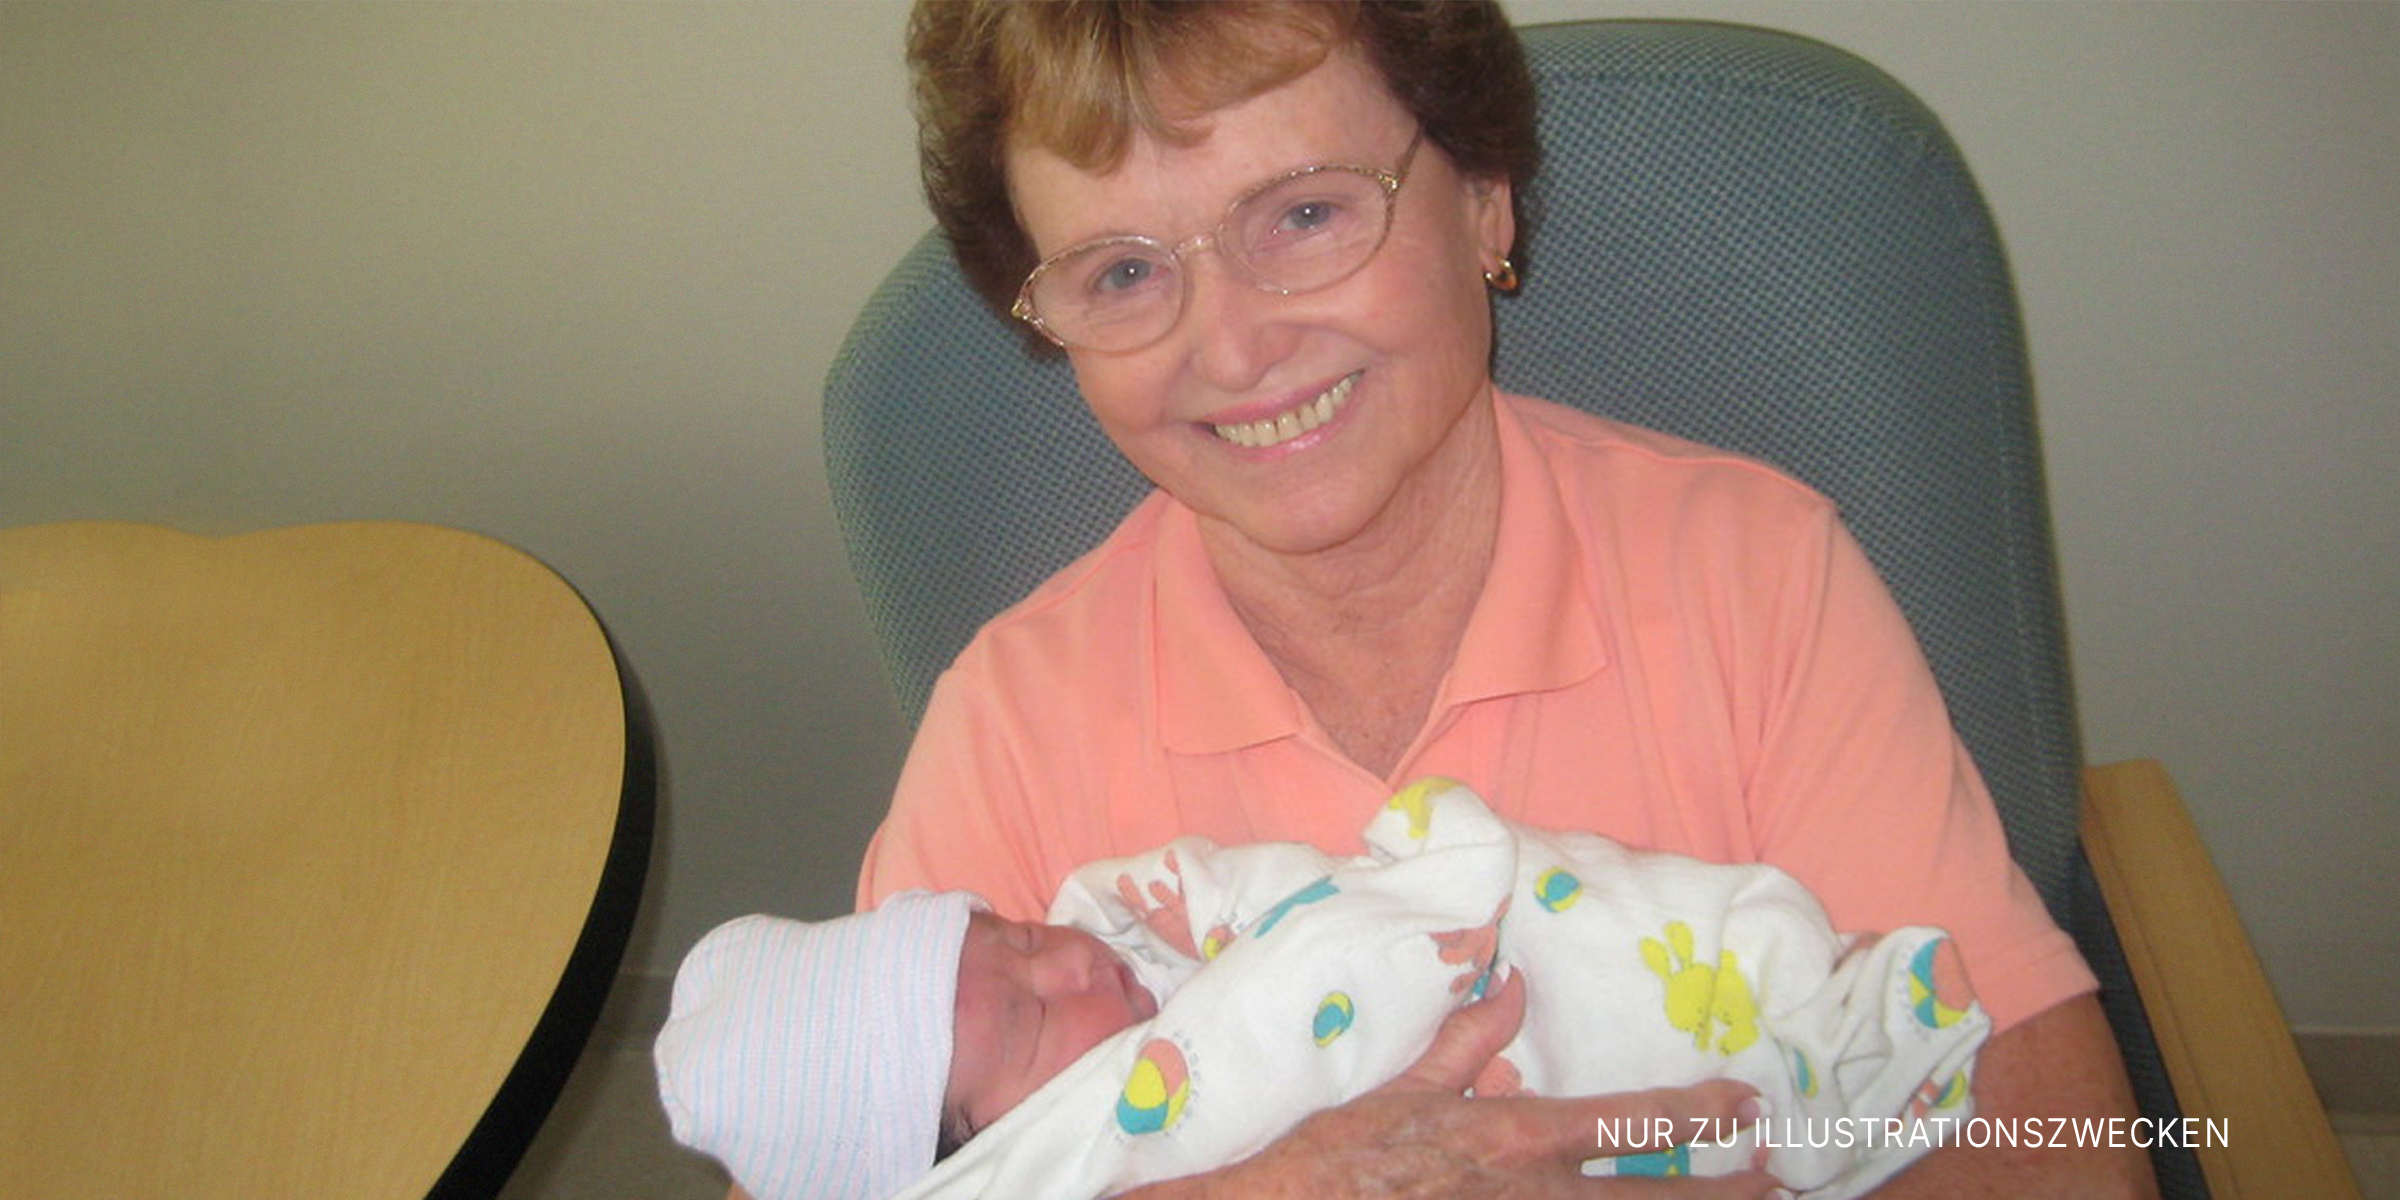 Eine ältere Frau hält ein Neugeborenes | Quelle: flickr.com/ryarwood/CC BY-SA 2.0